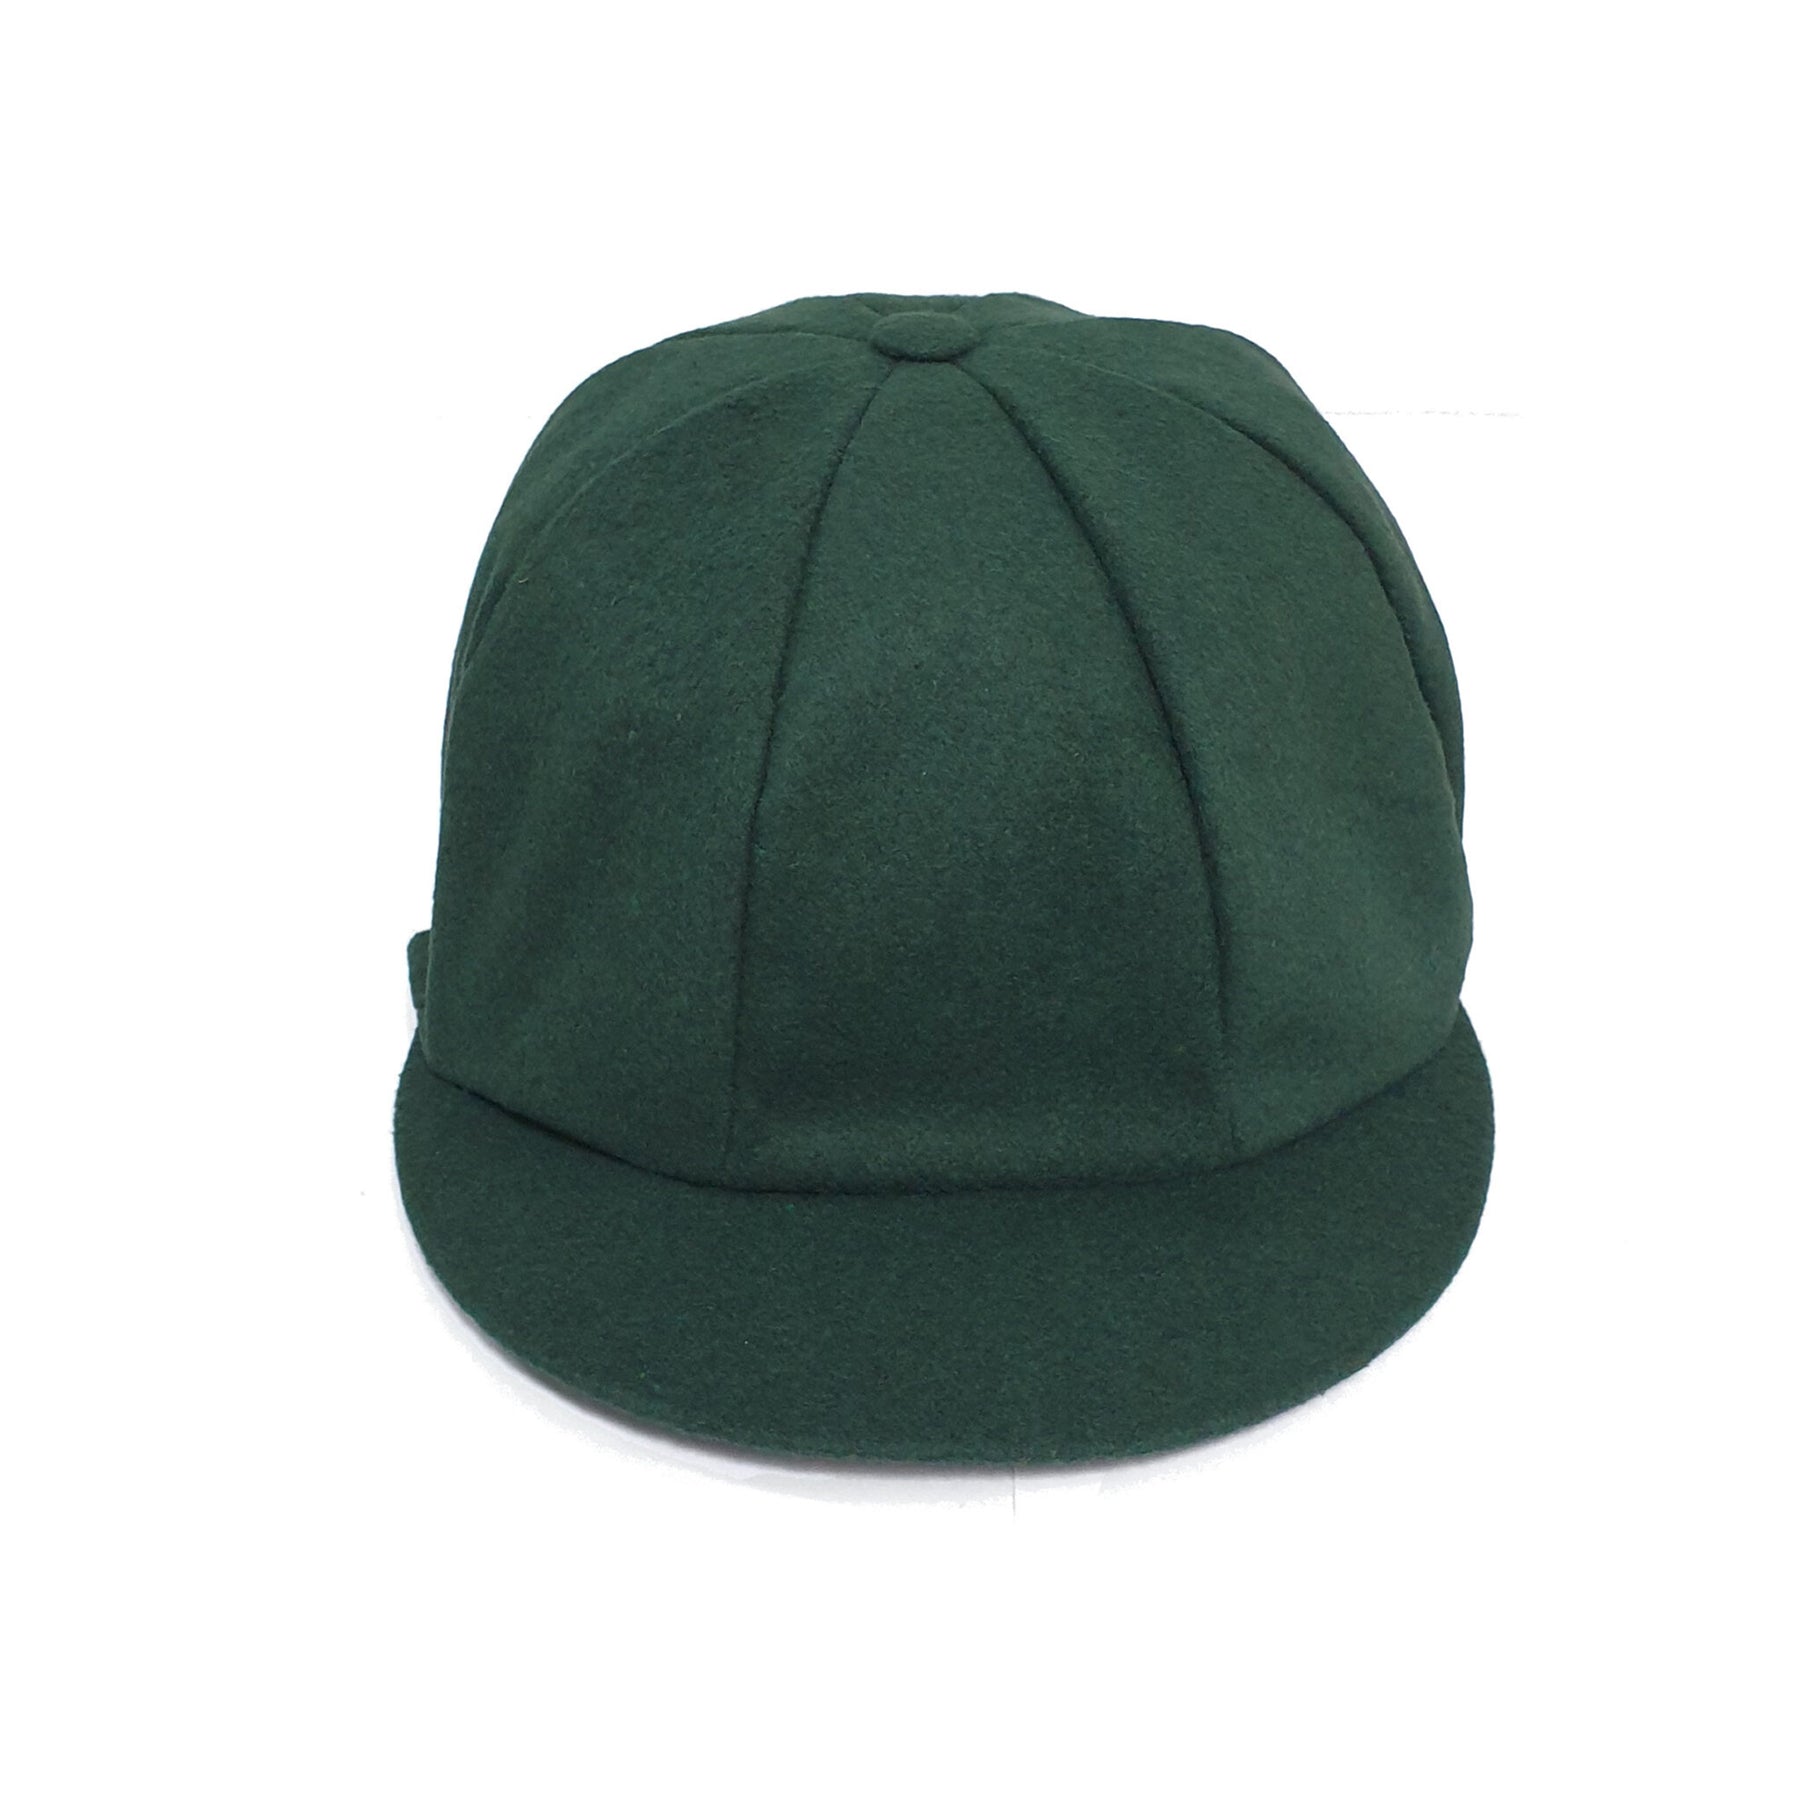 Australian Style Cricket Cap: Green